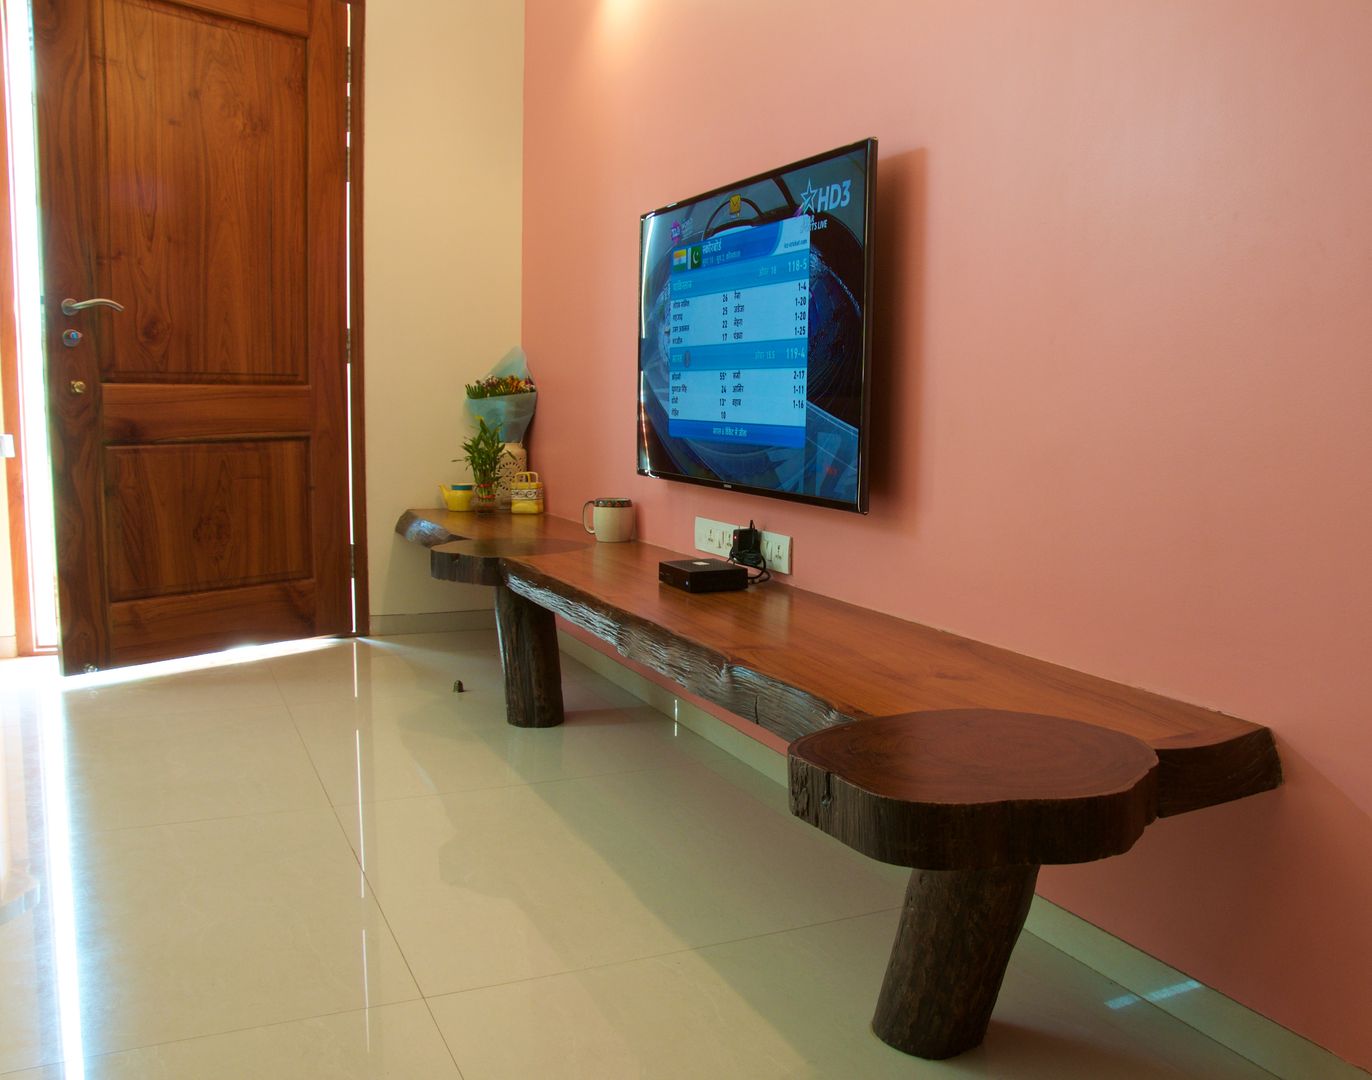 Bungalow in Bhuj, Design Kkarma (India) Design Kkarma (India) Eclectic style living room